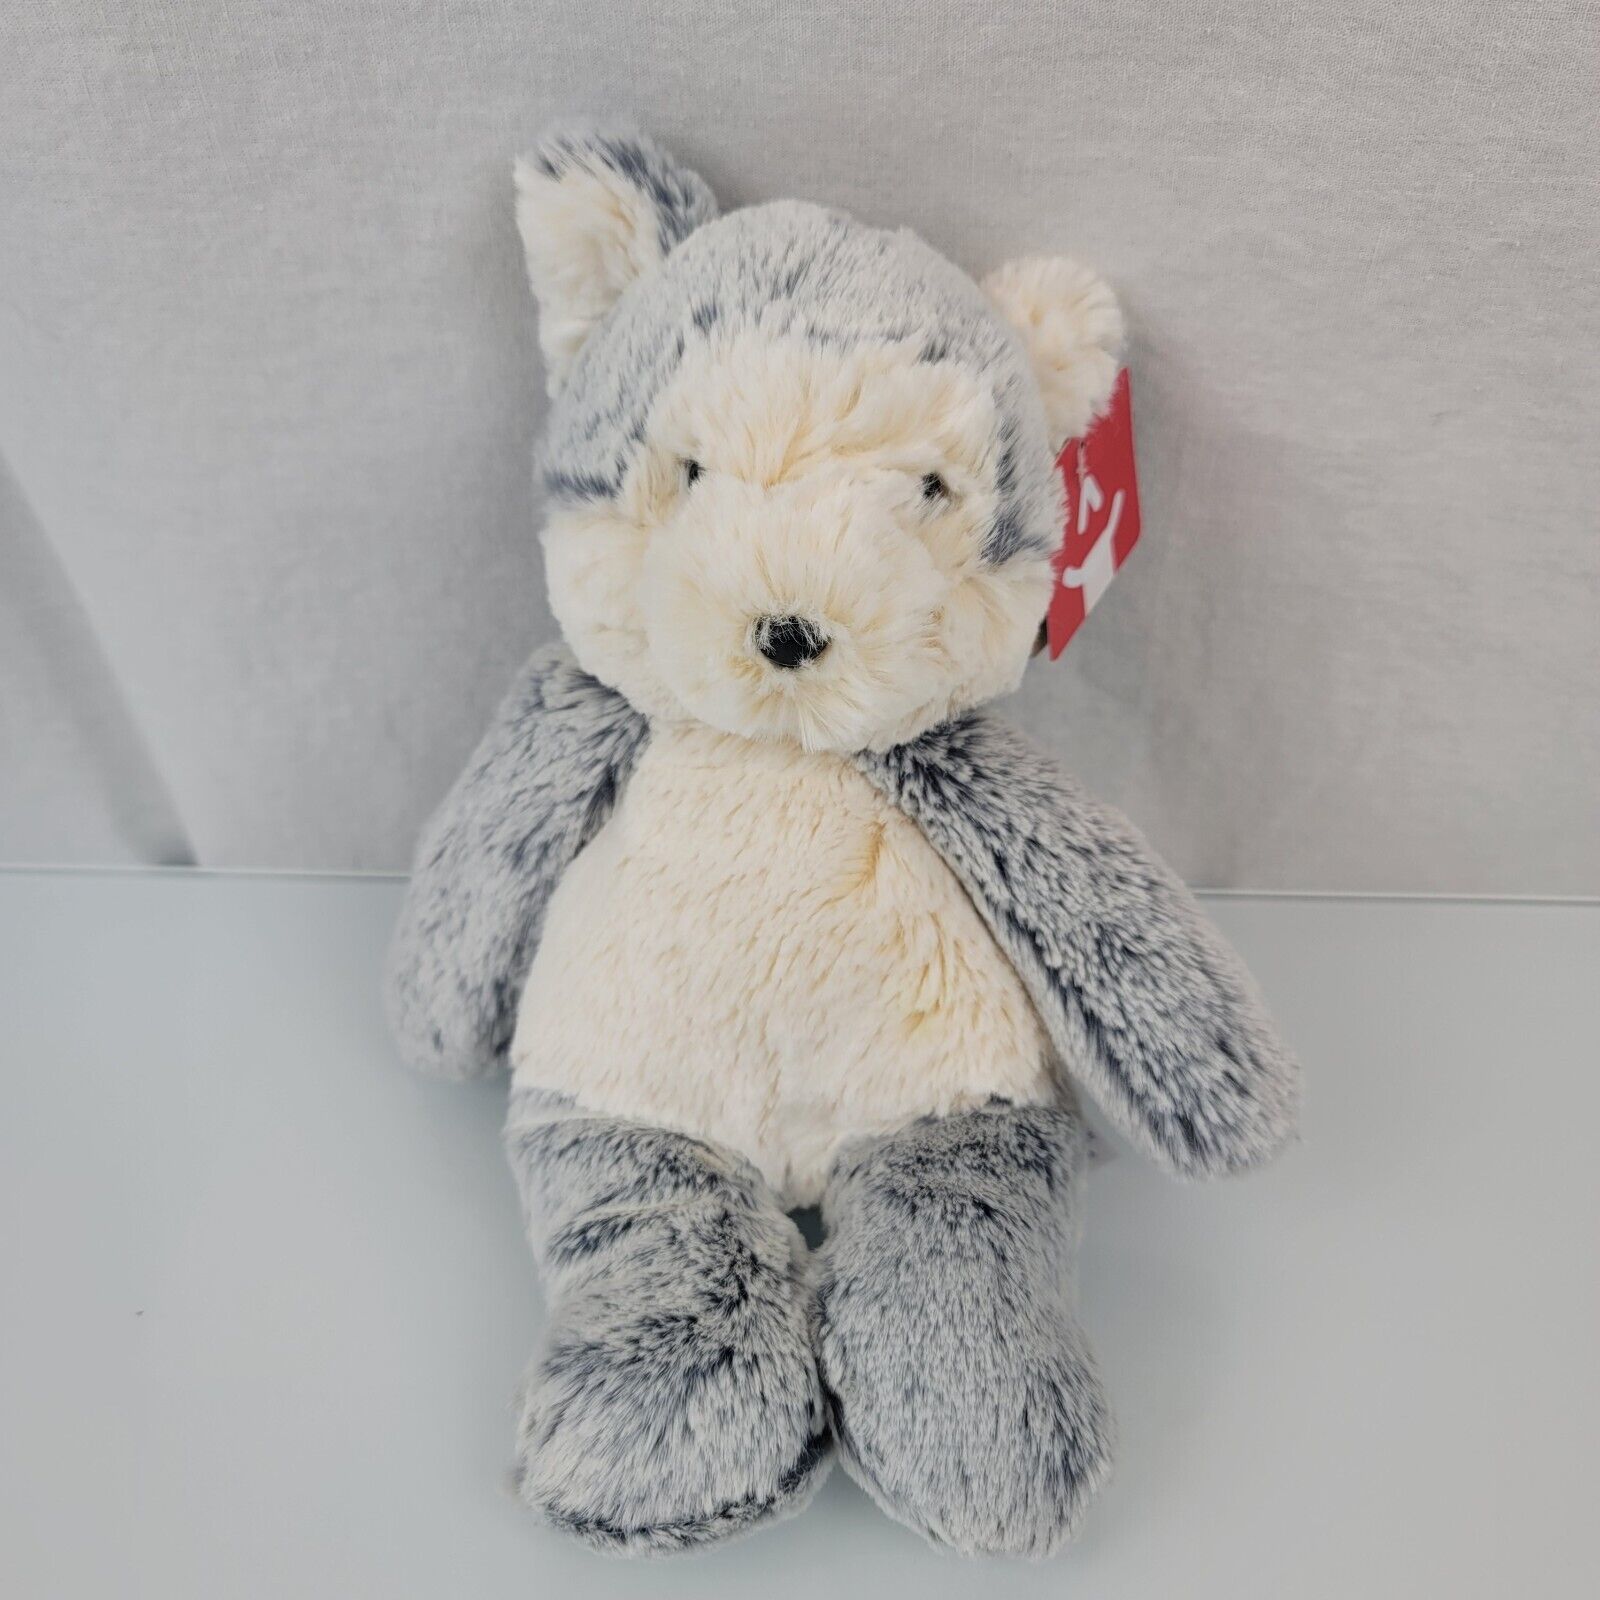 Small Sweet and Softer Wolf Stuffed Animal by Aurora Beanbag Husky Dog NEW 9" - $44.54